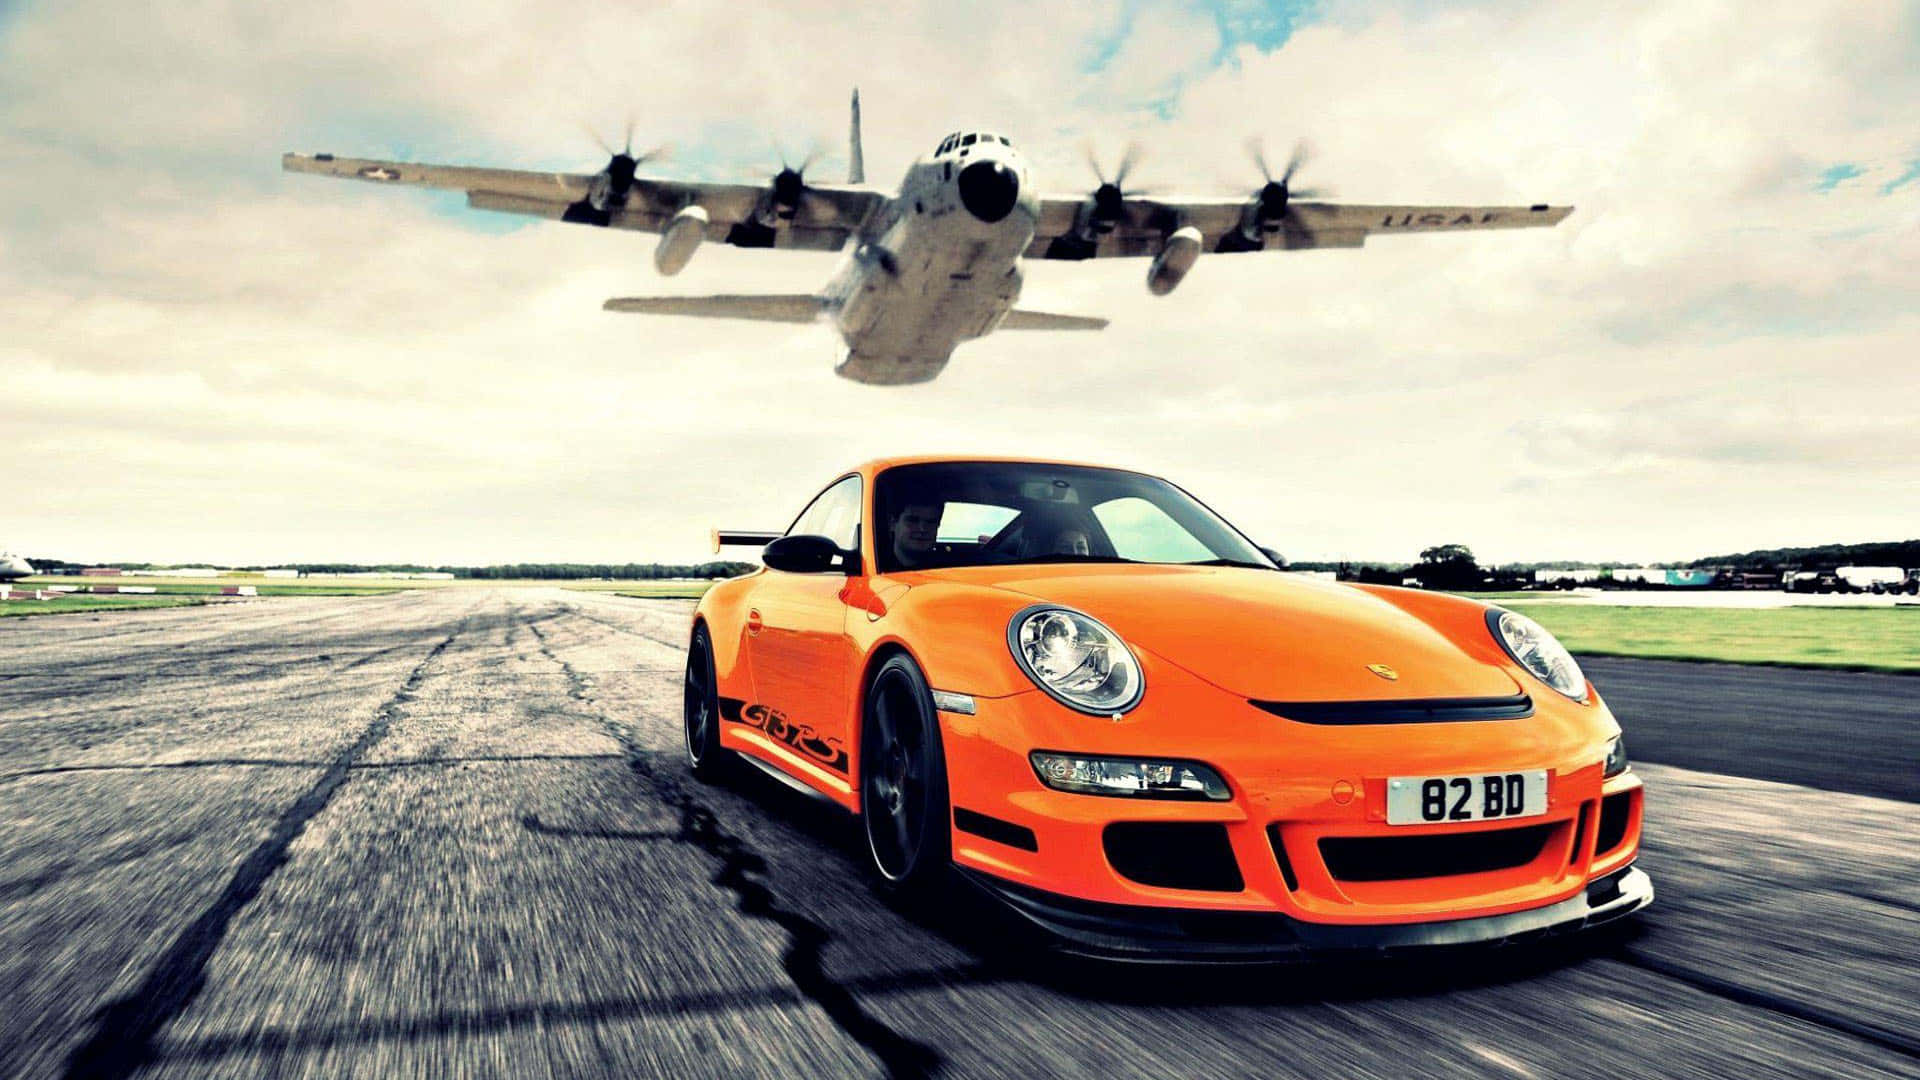 Luxurious Porsche sports car amidst striking cityscape